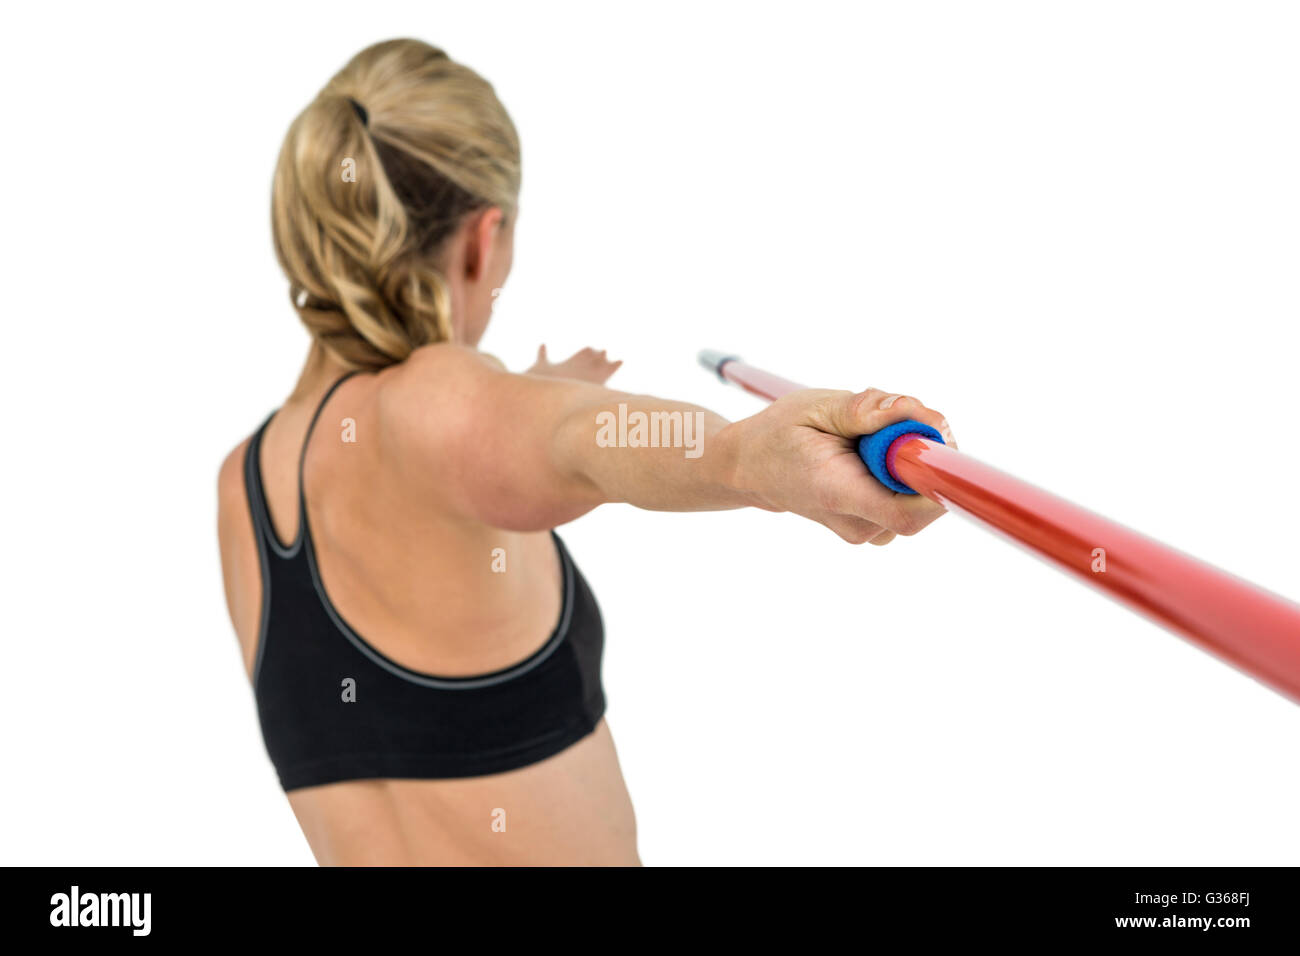 Athlete preparing to throw javelin Stock Photo